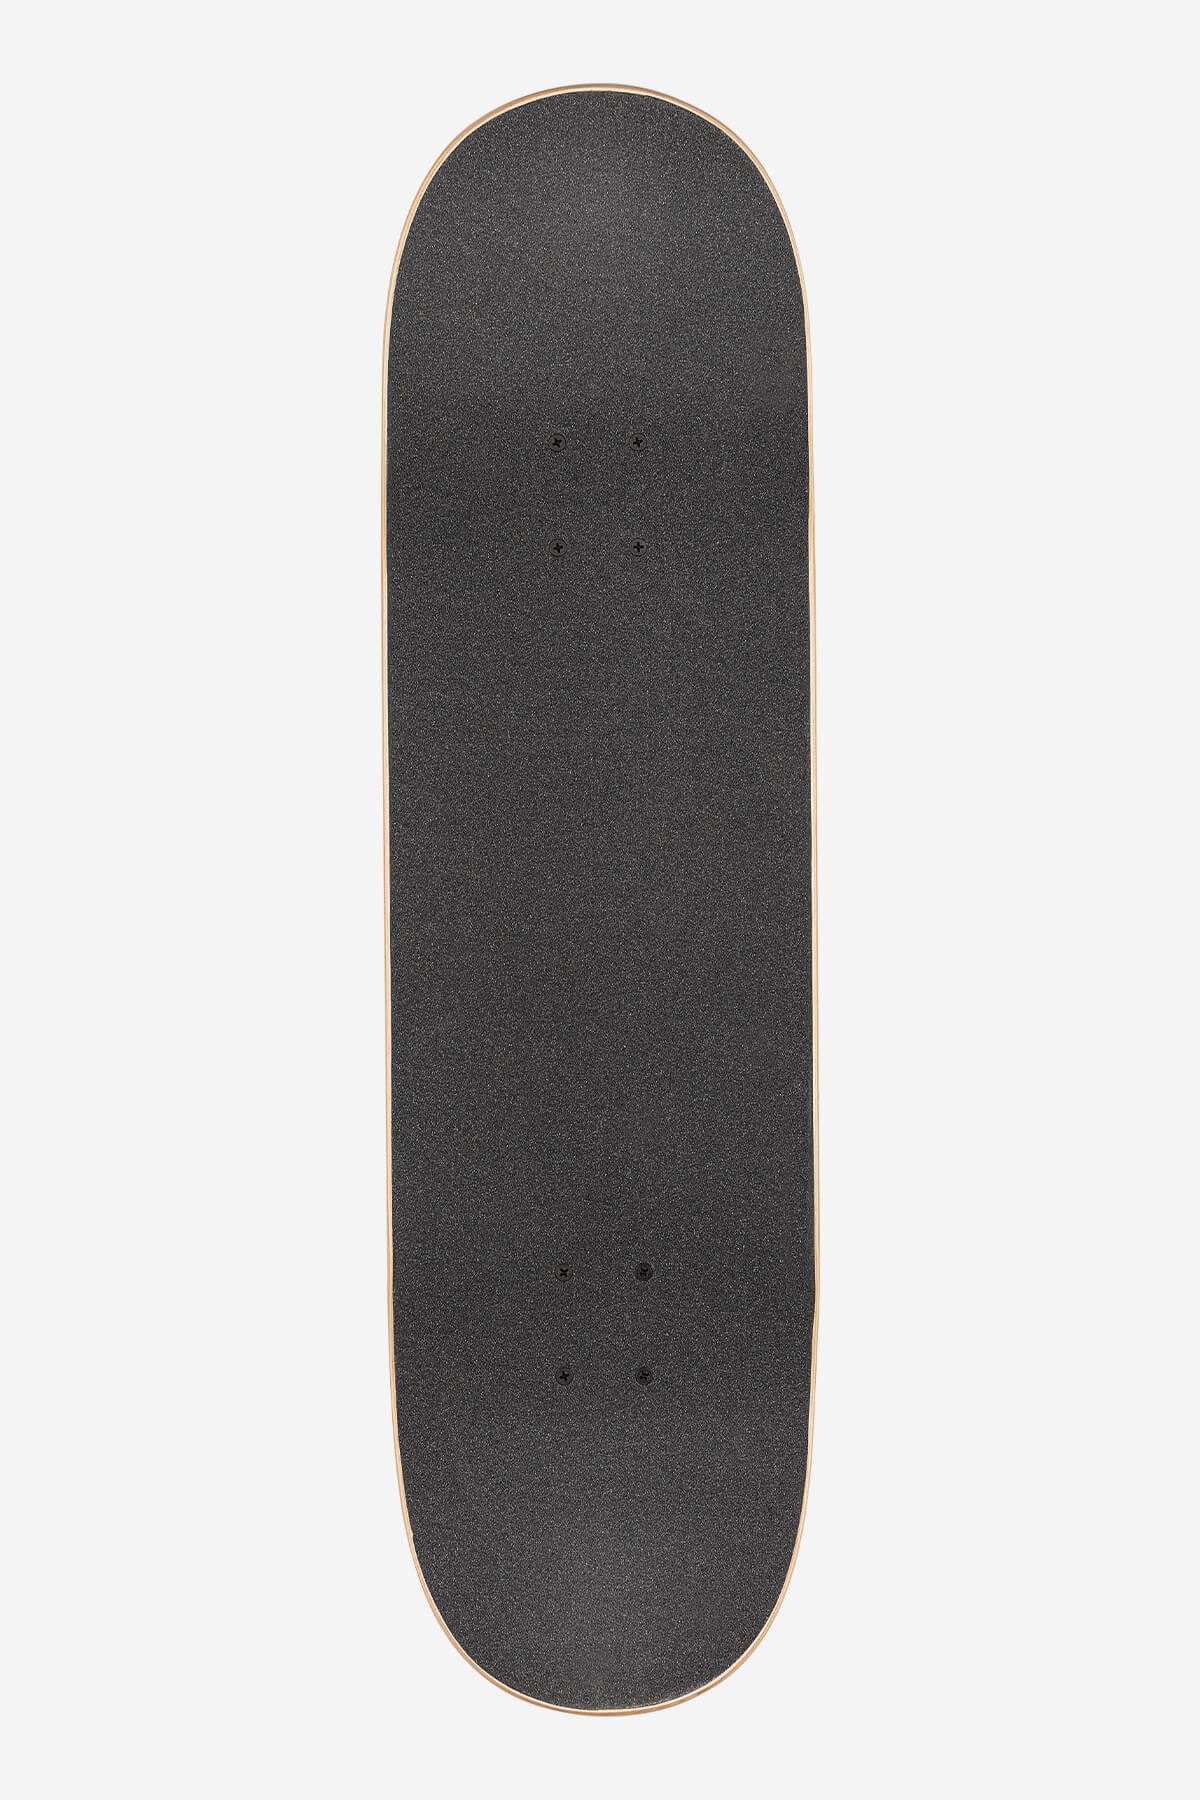 Globe - G1 Stack - Lone Palm - 8,0" completo Skateboard